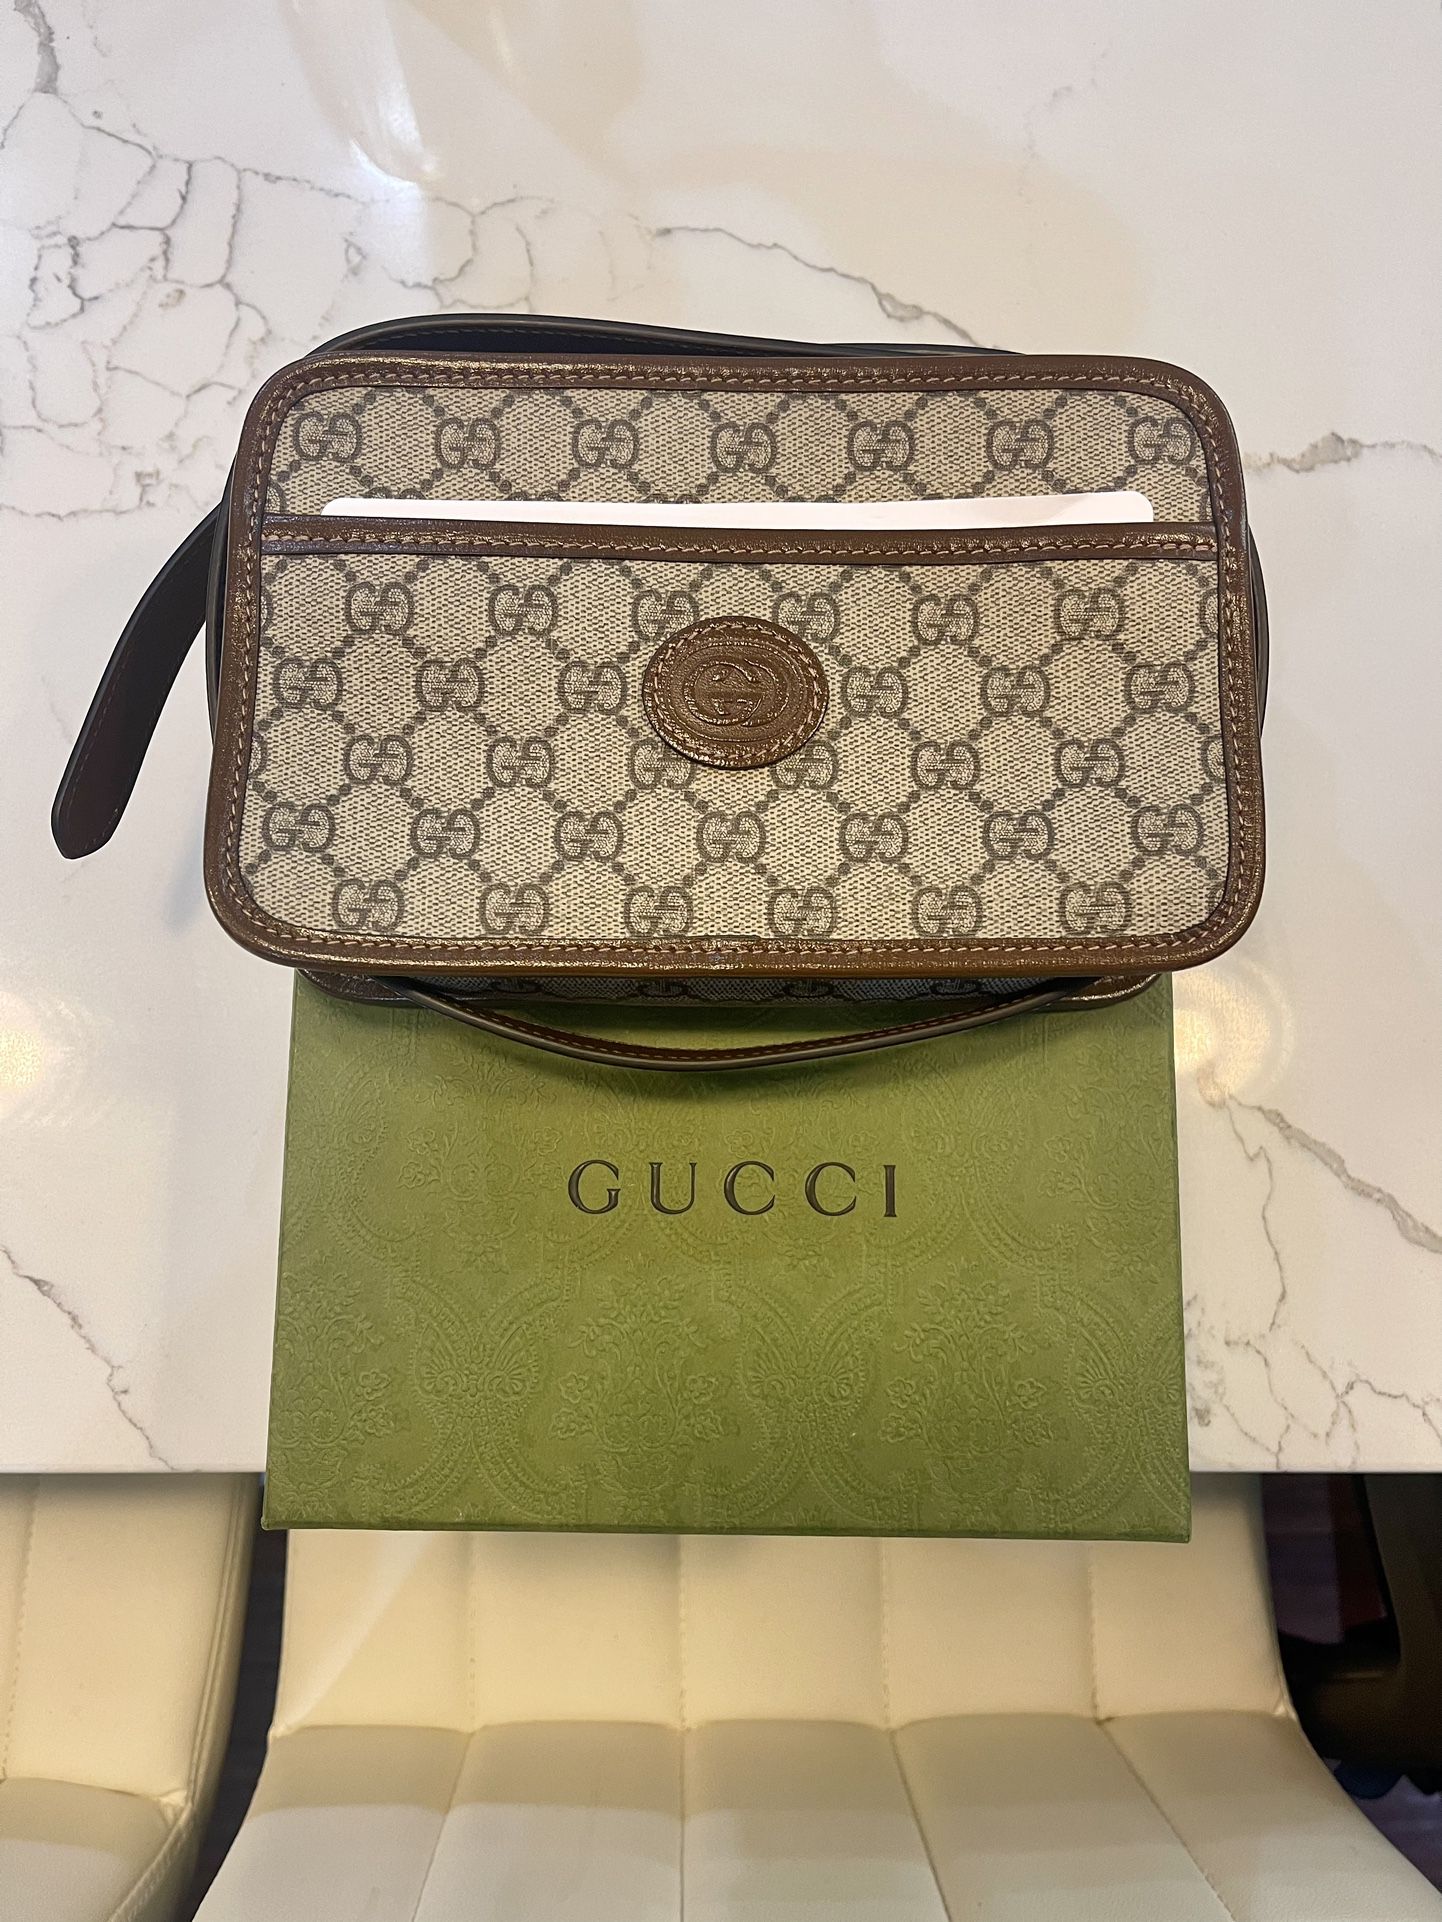 Sale - Men's Gucci Crossbody Bags / Crossbody Purses offers: at $1,150.00+